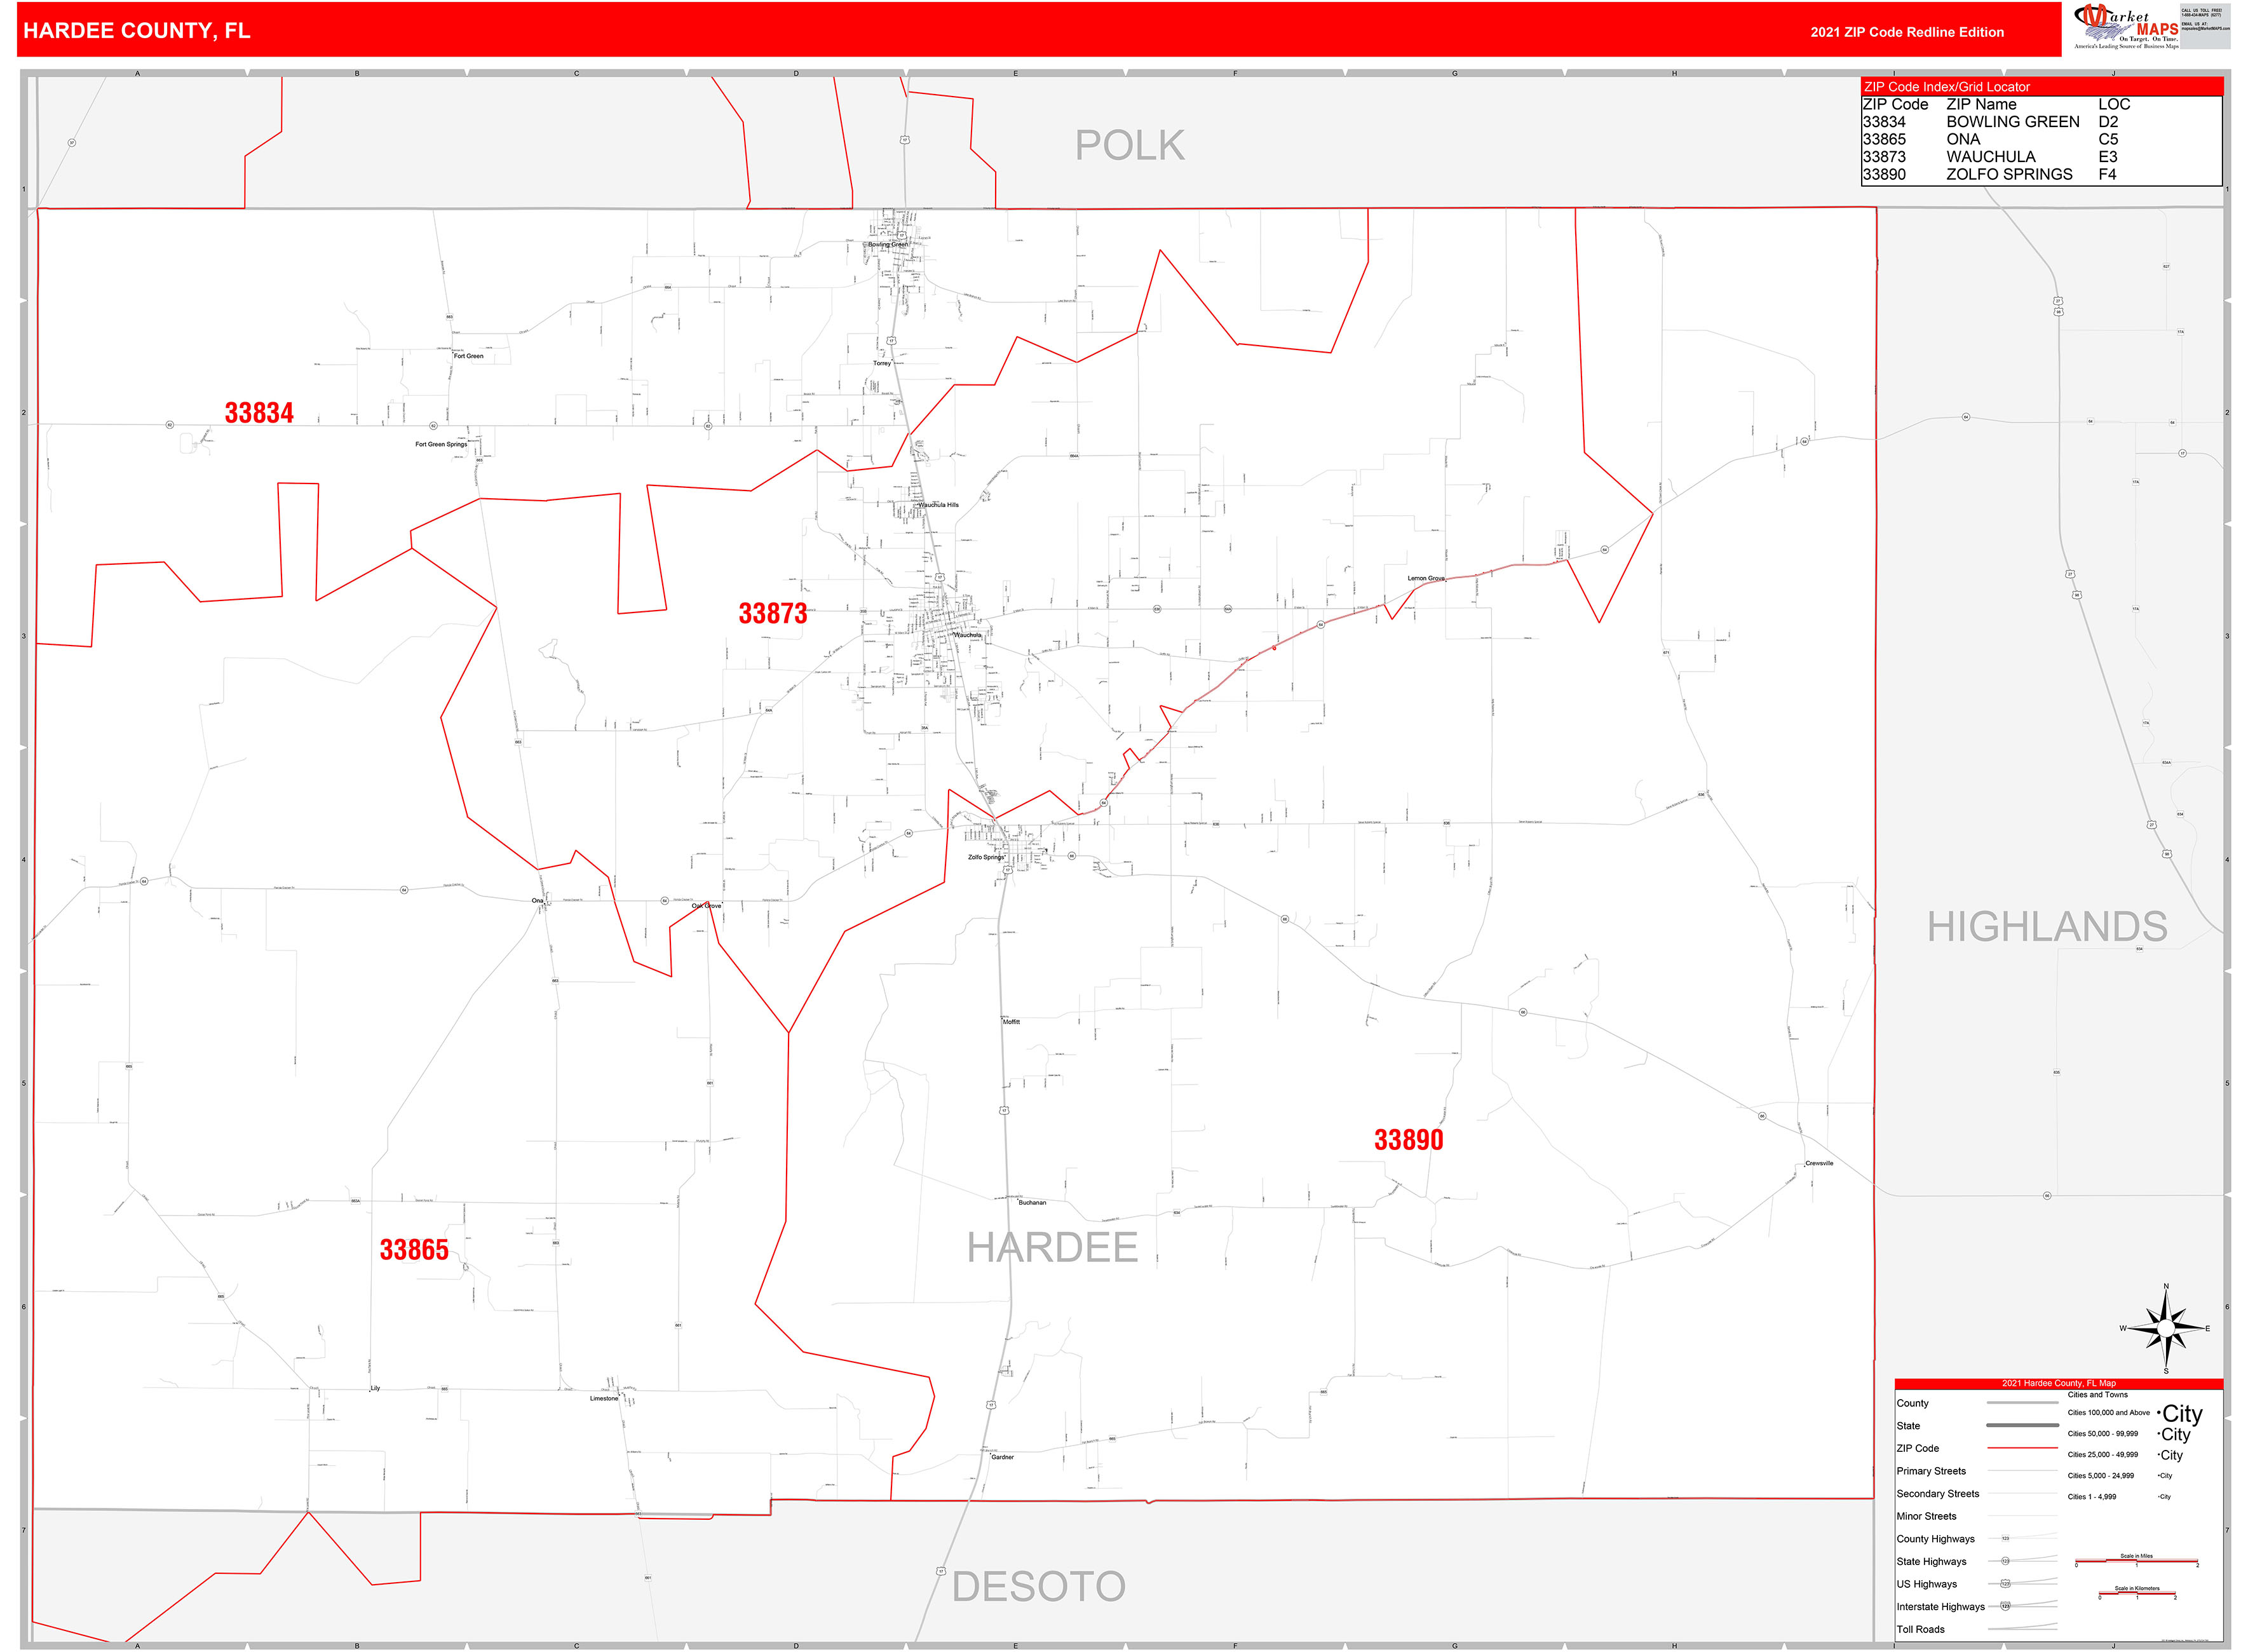 Hardee County, FL Zip Code Wall Map Red Line Style by MarketMAPS - MapSales